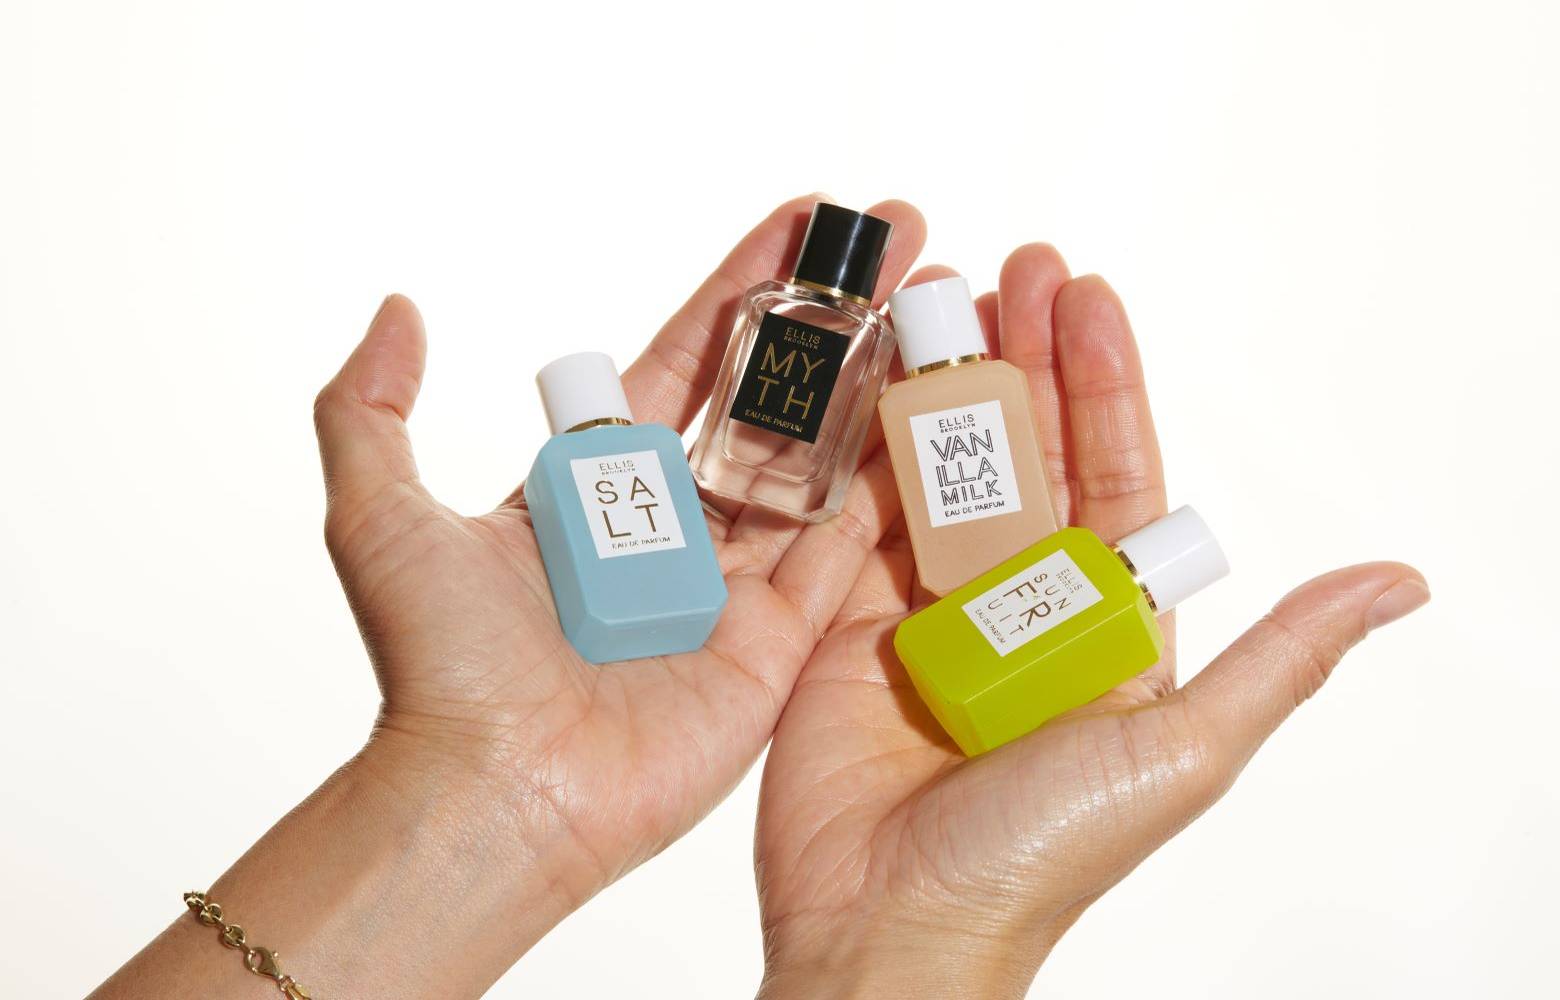 CHAPTERS Mini Fragrance Gift Set